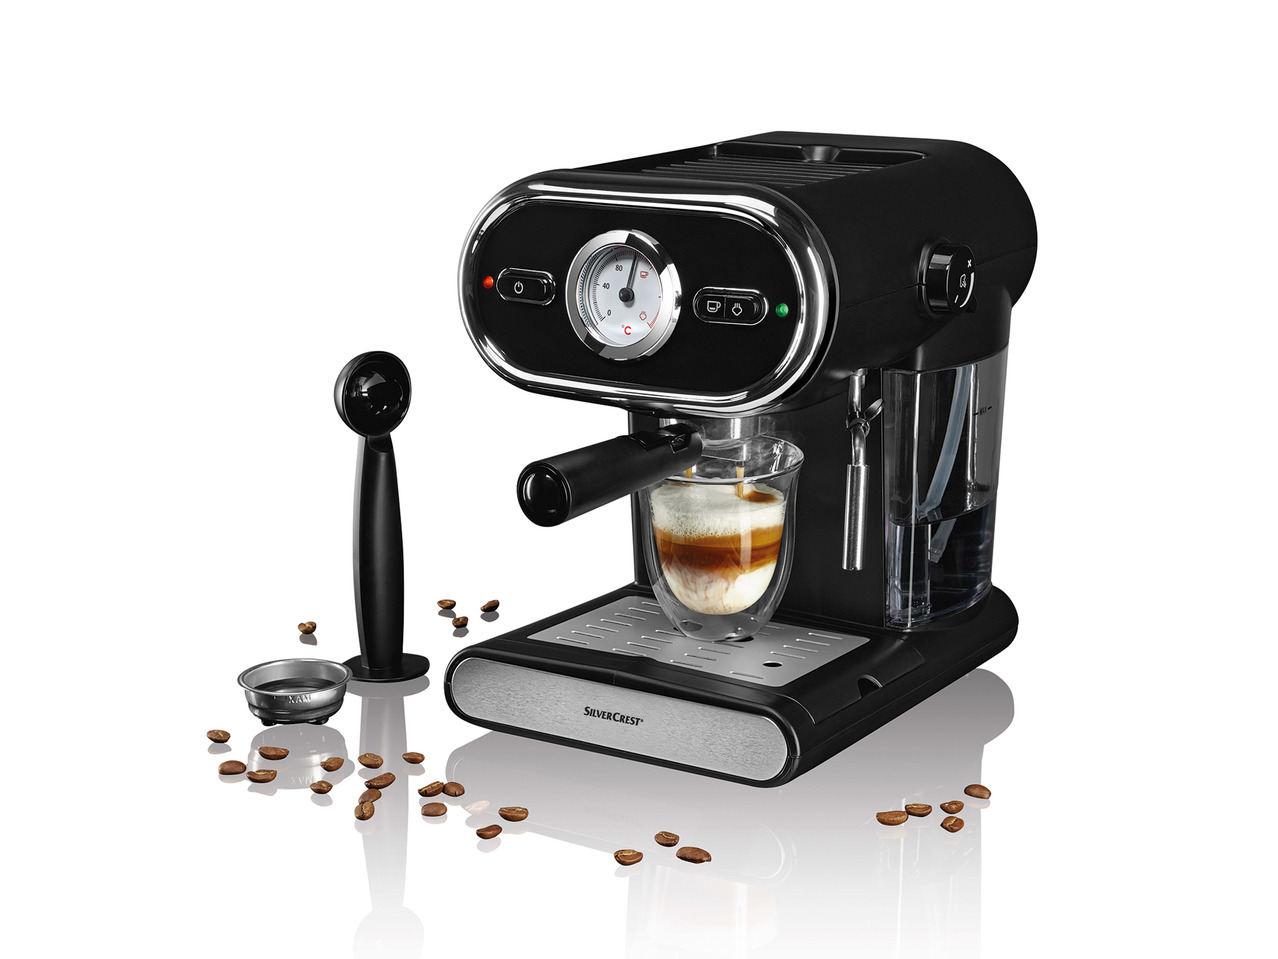 Silvercrest Espresso Machine1